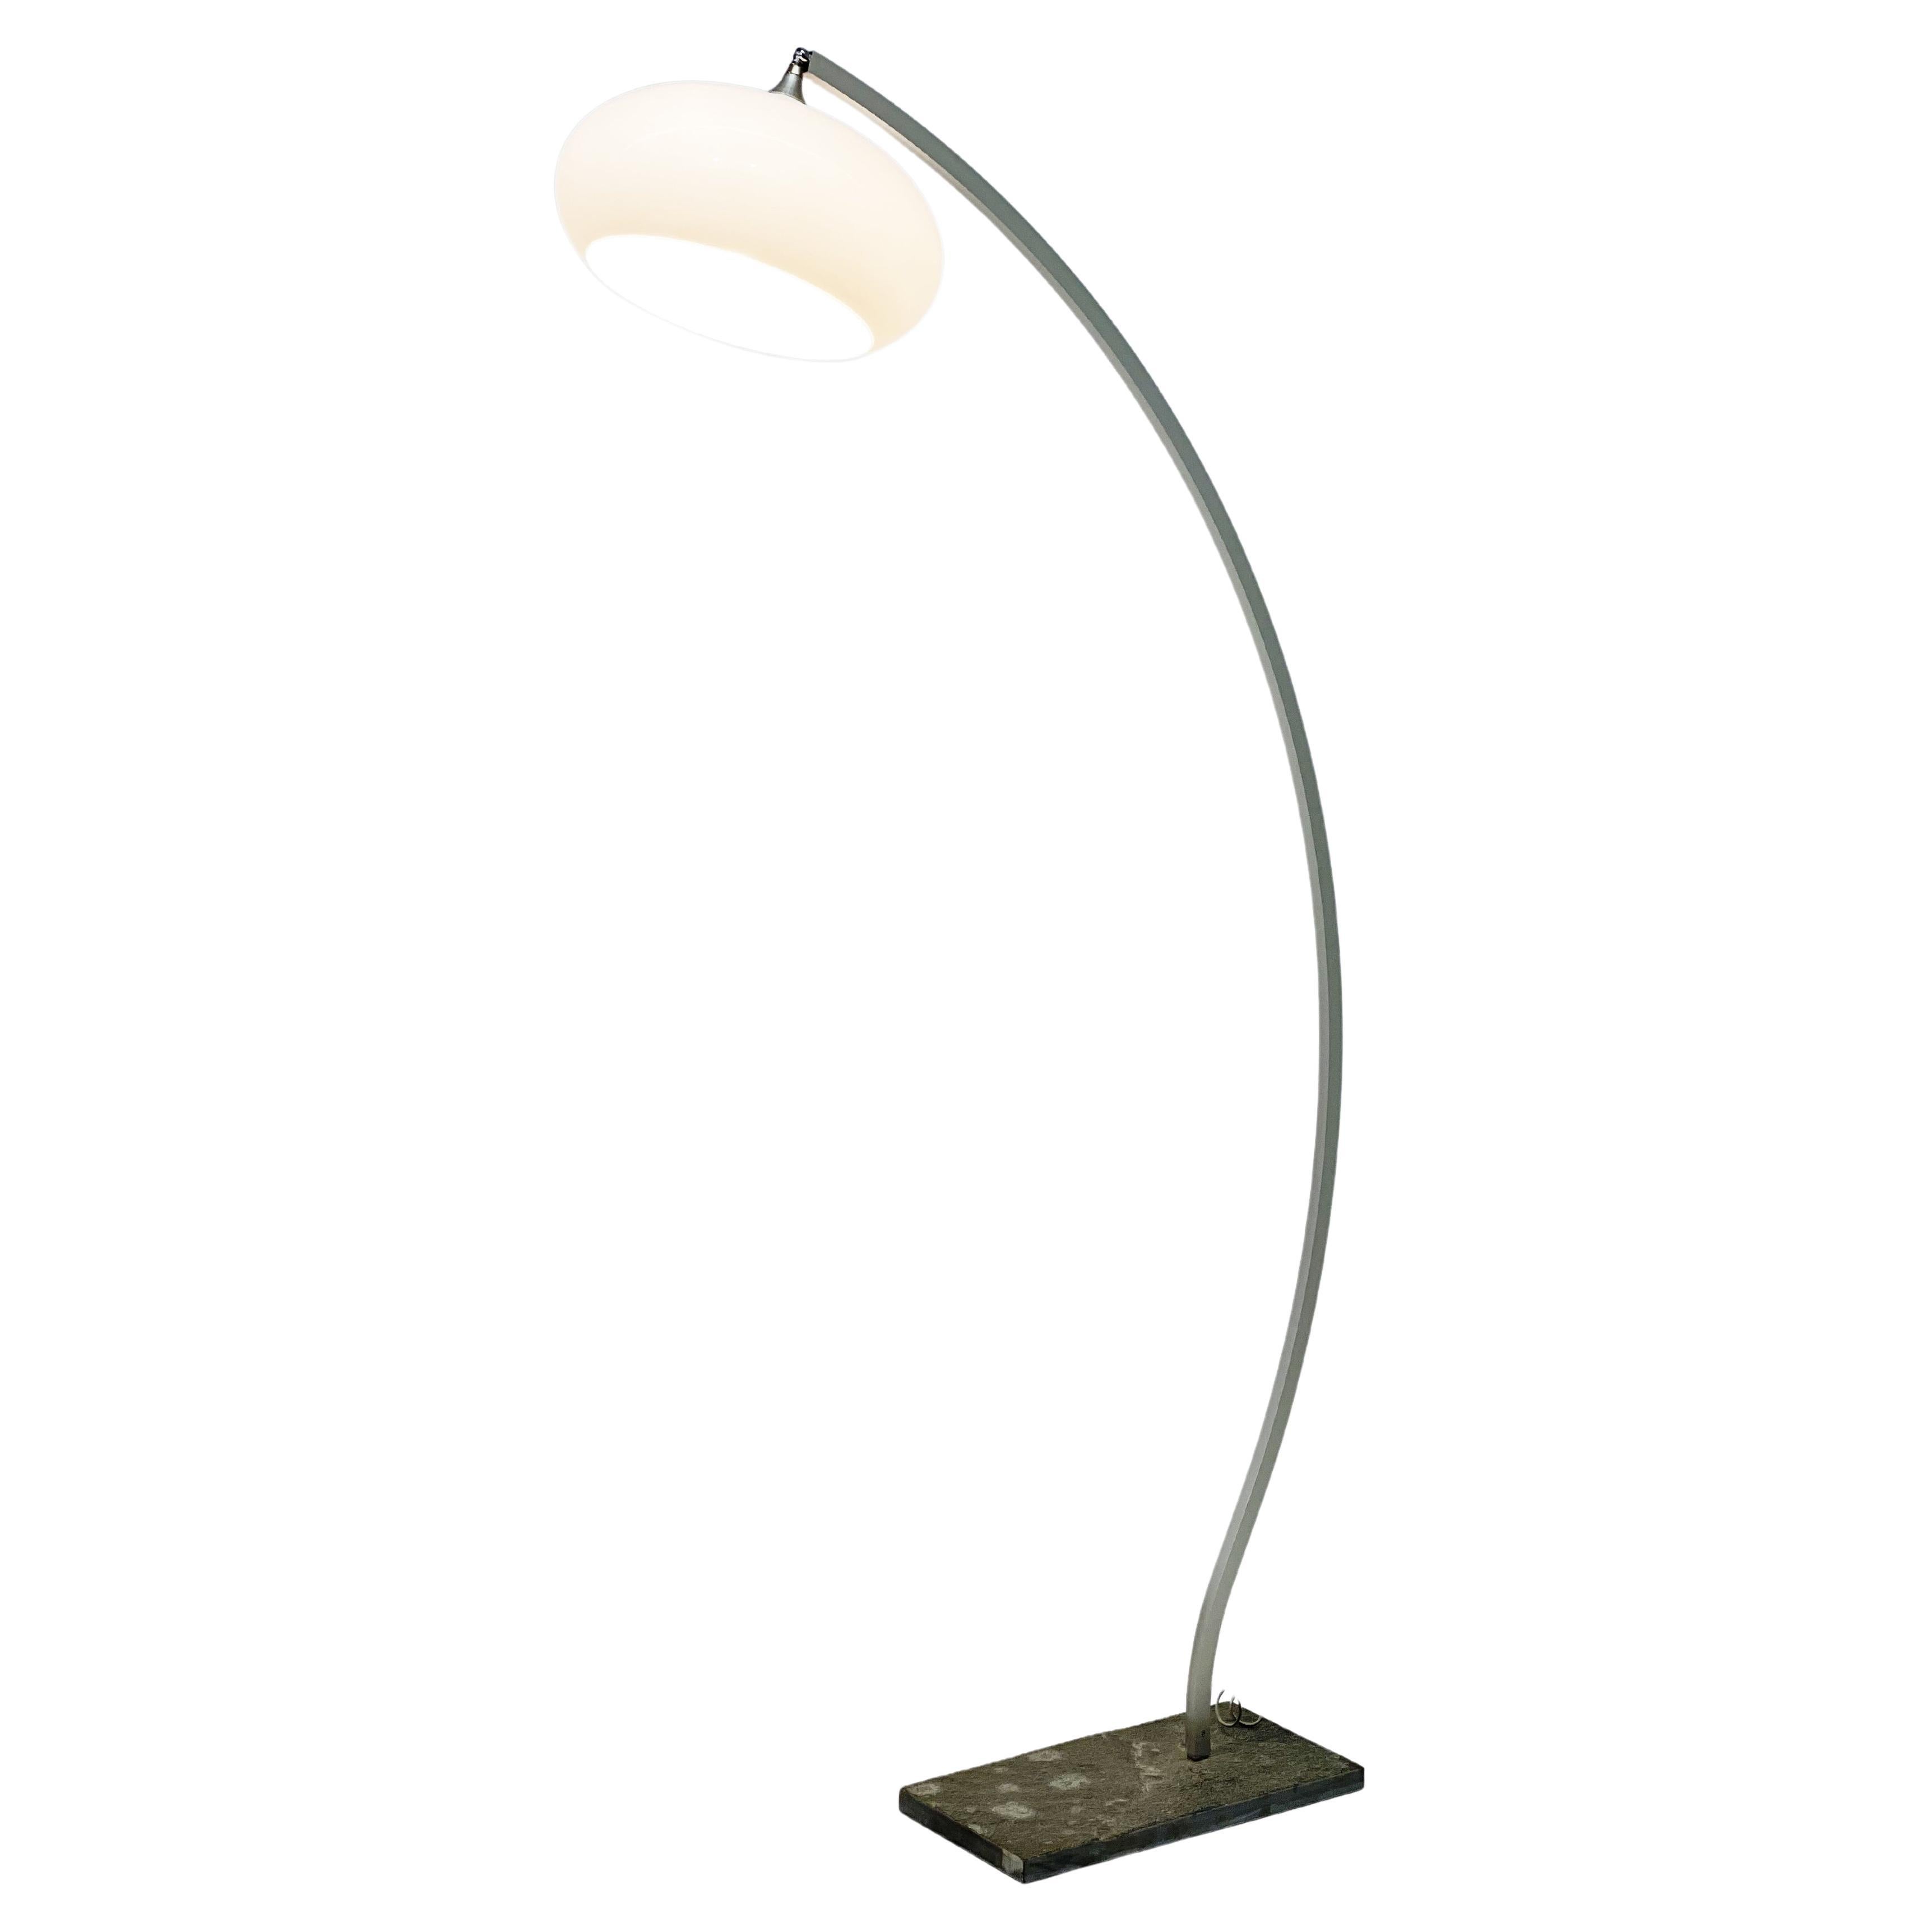 Danish arc floor lamp For Sale